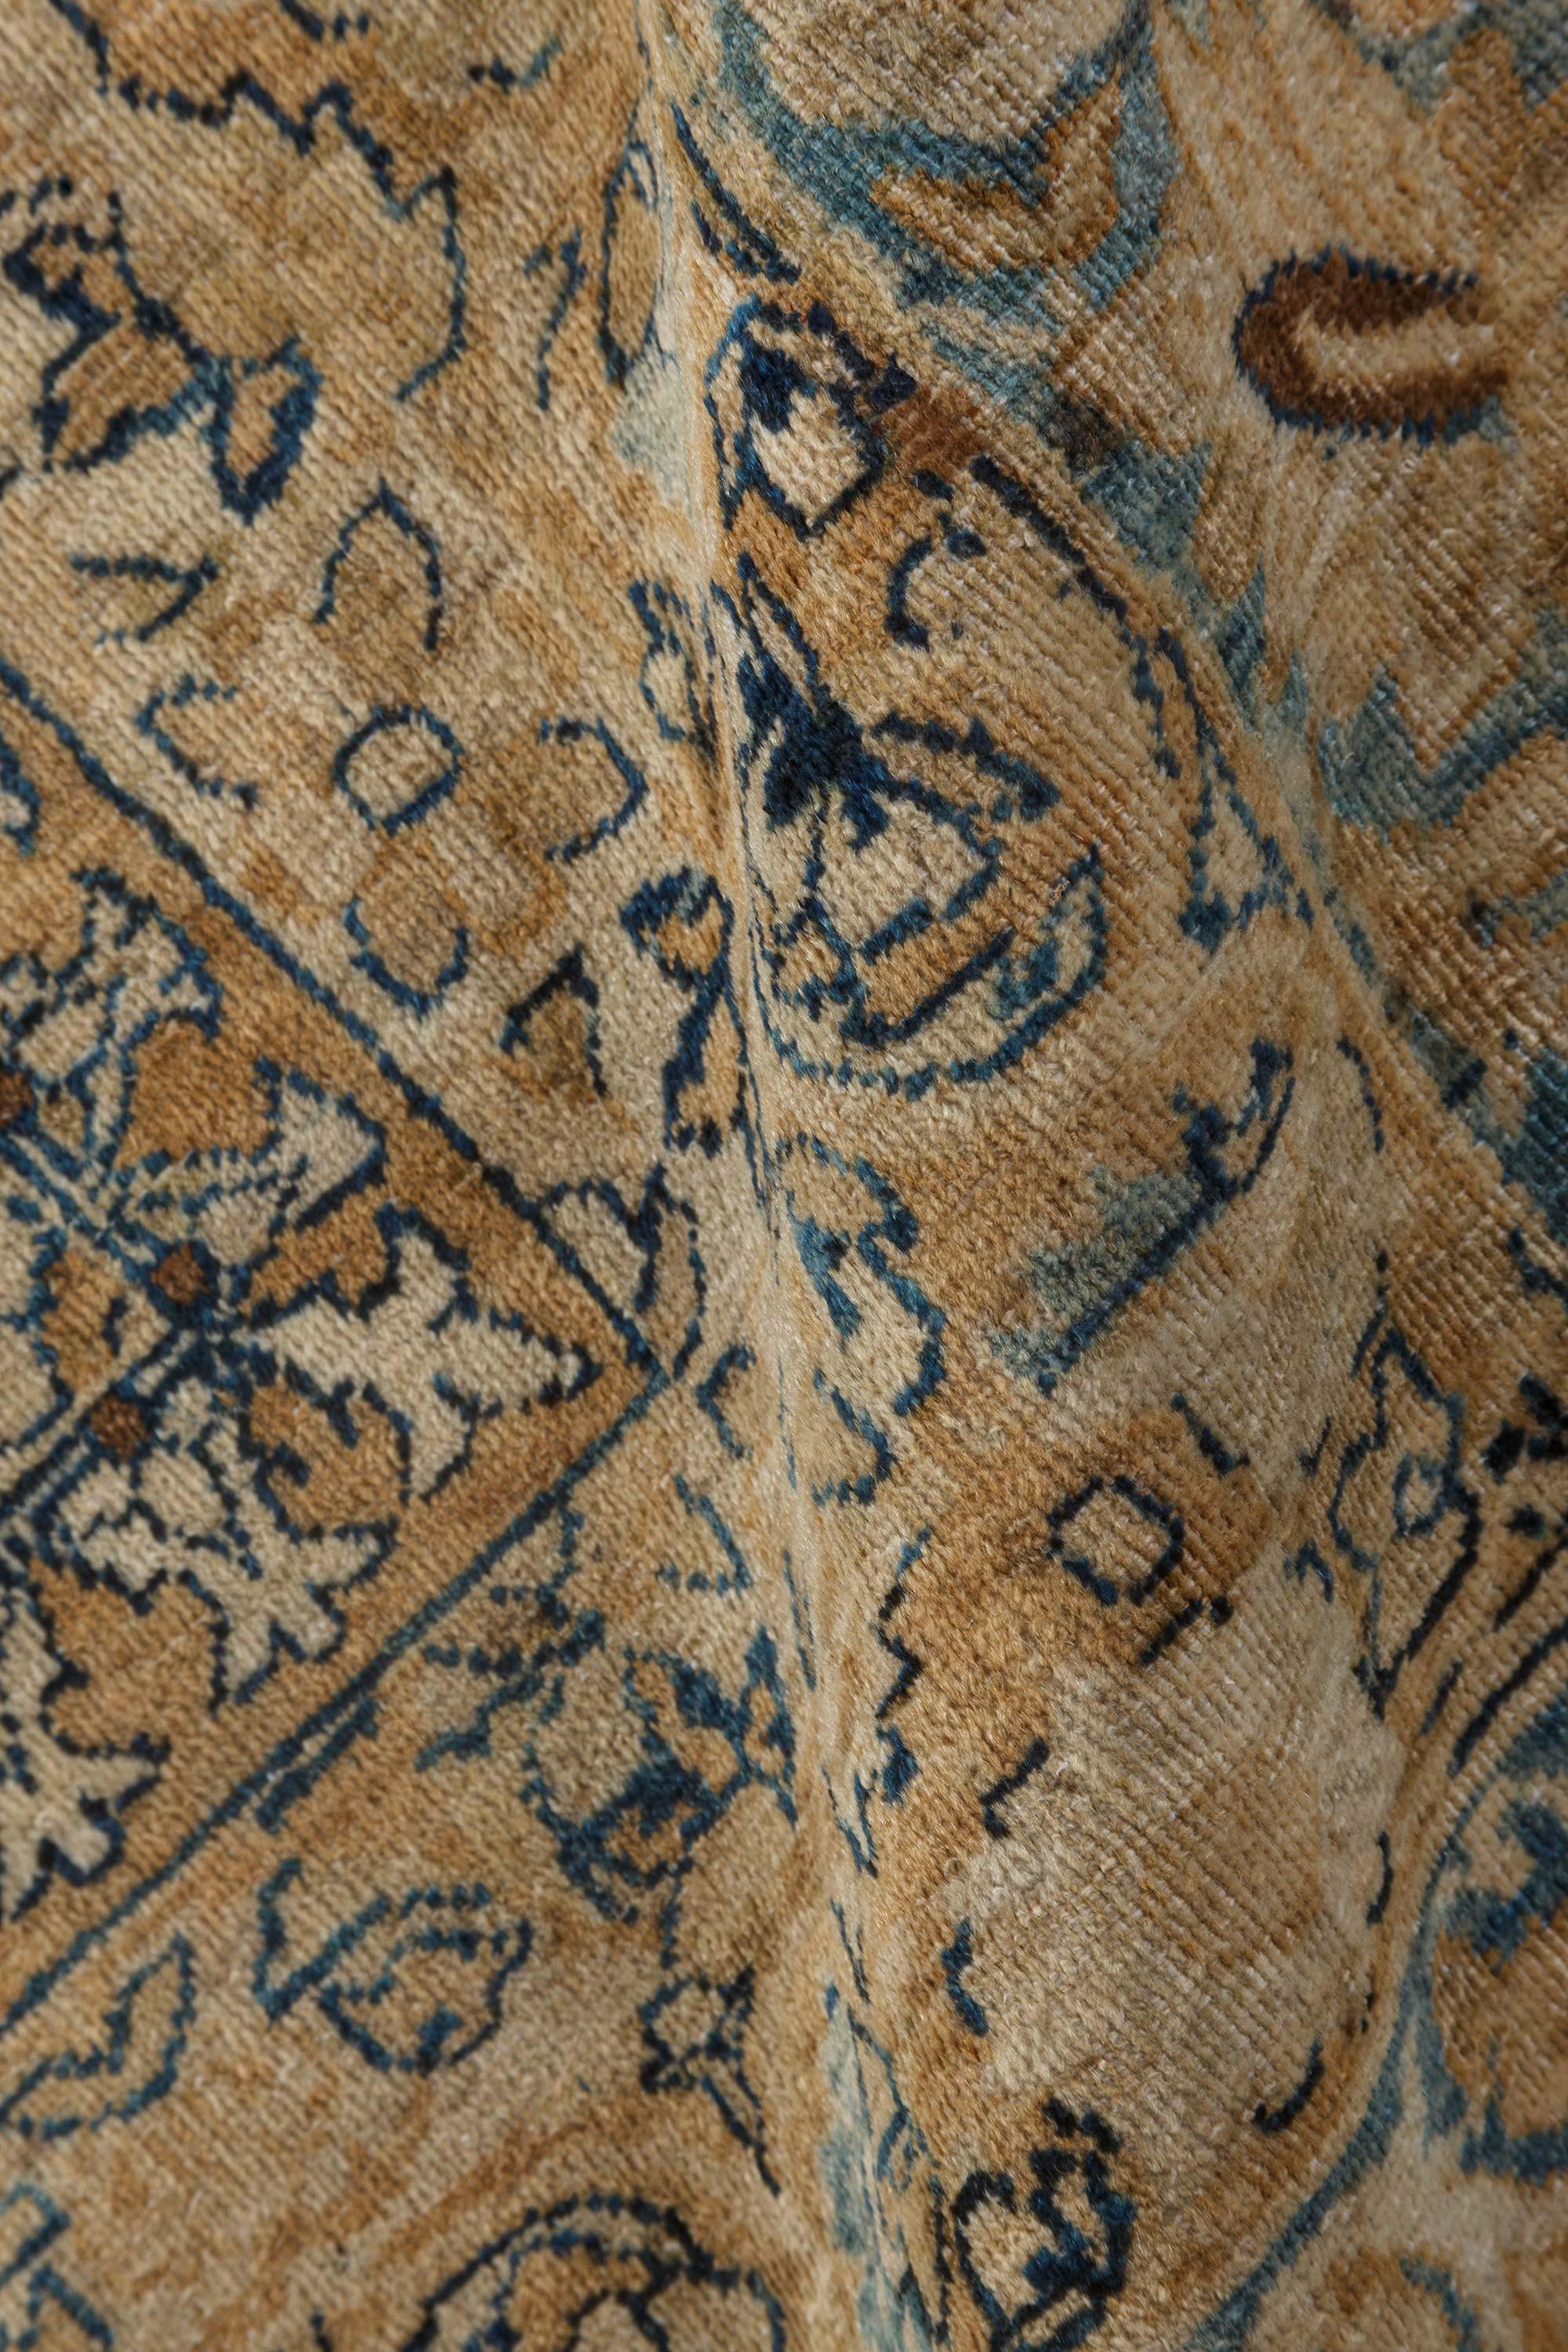 Oversized 19th century Persian Kirman carpet
Size: 16'0